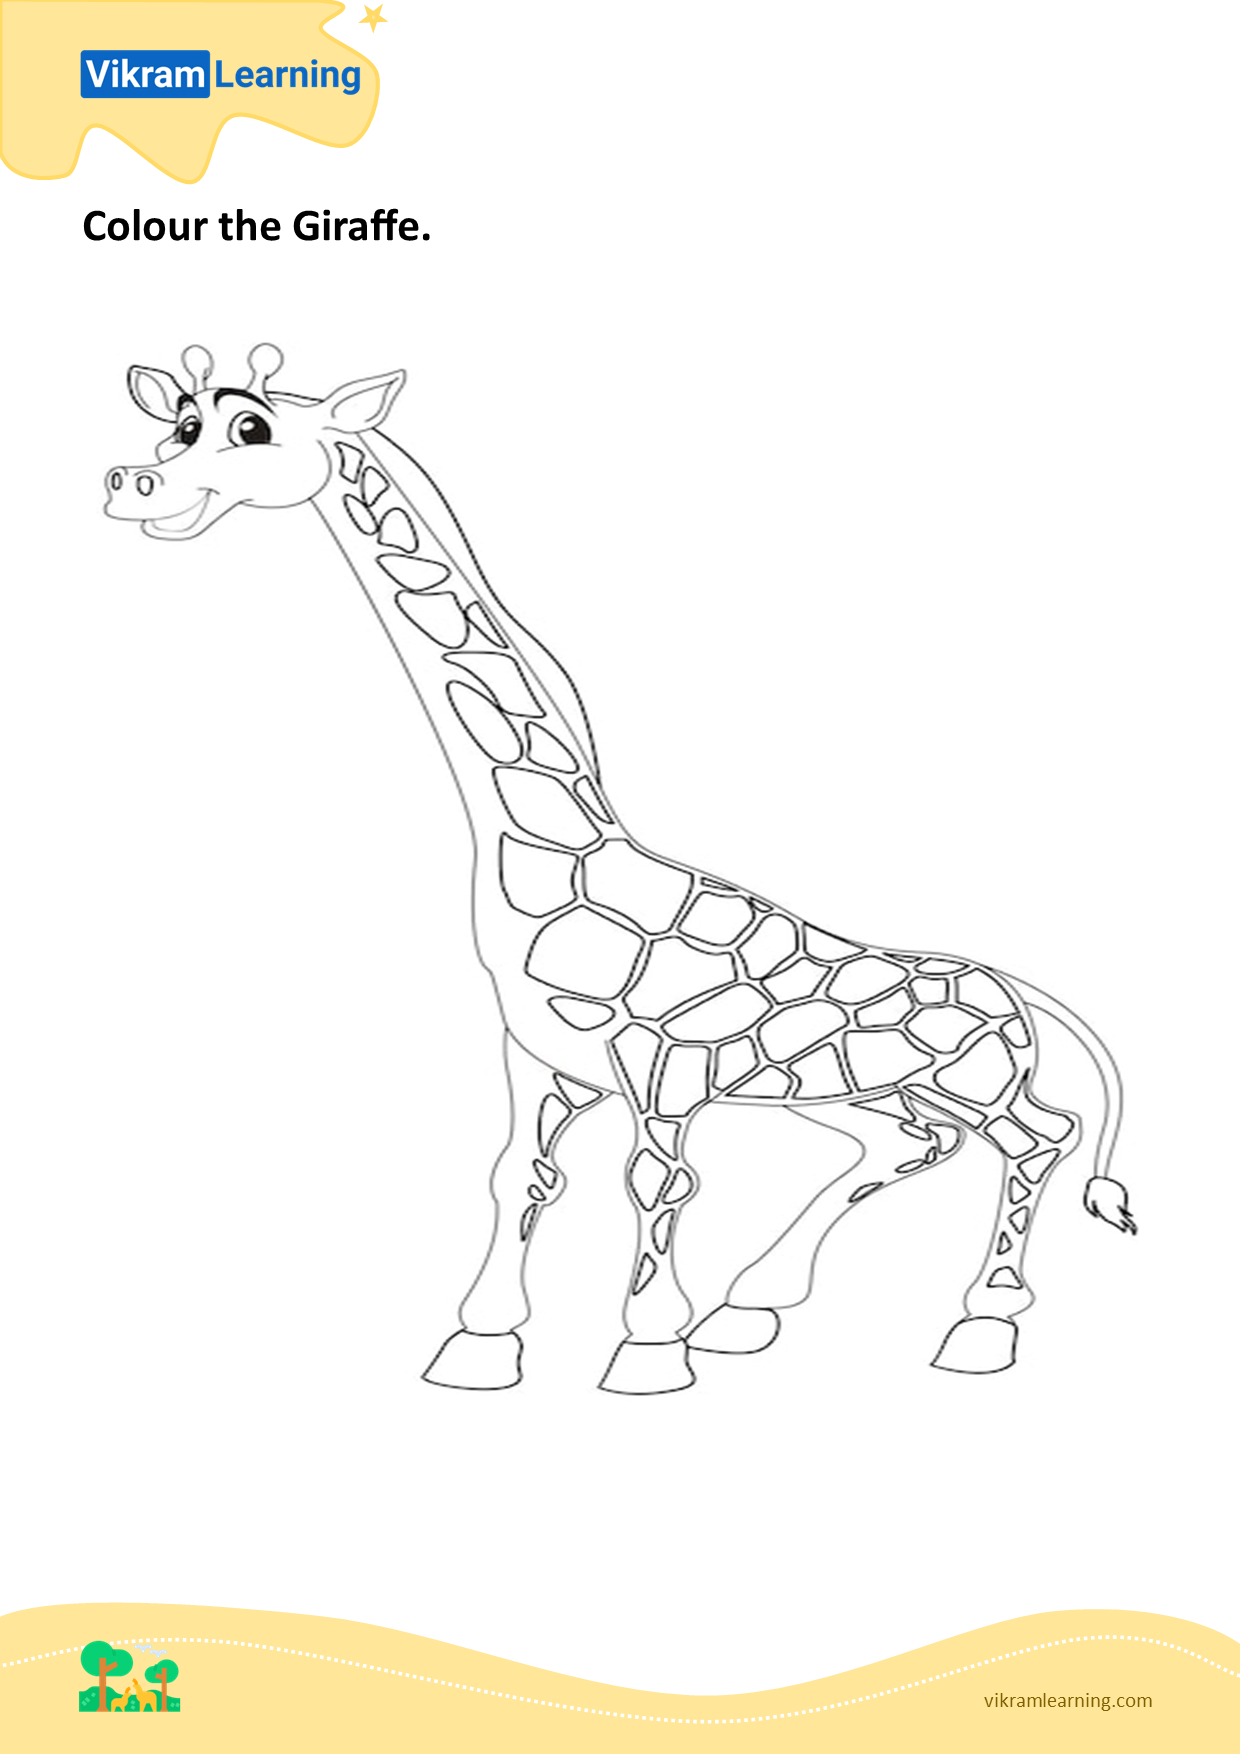 Download colour the giraffe worksheets vikramlearning com